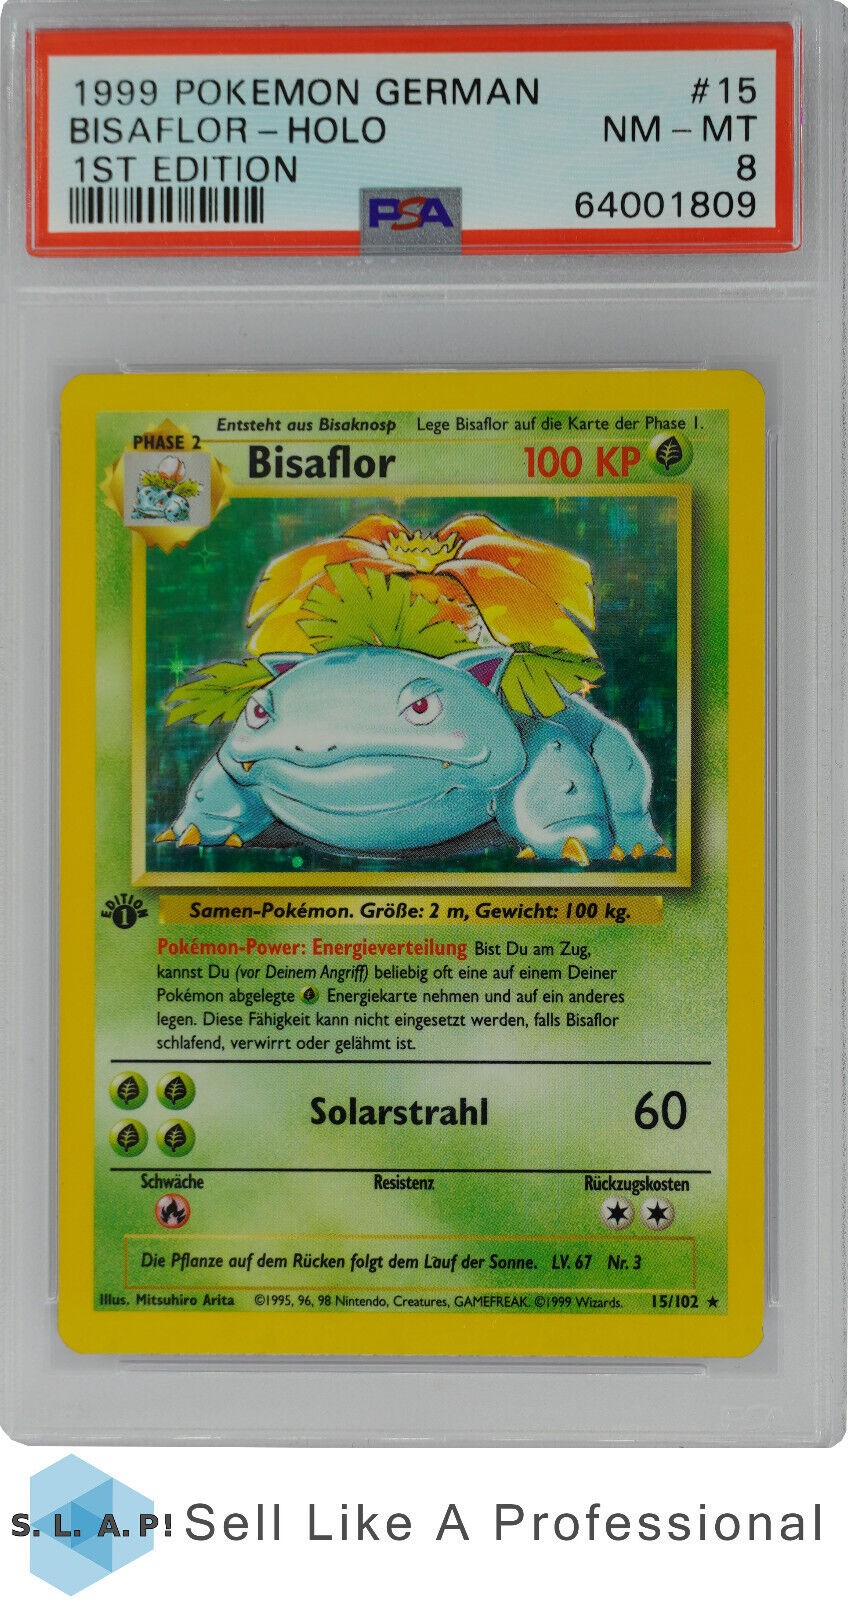 1999 Pokemon german 1 Auflage Bisaflor Holo 15102 PSA 8